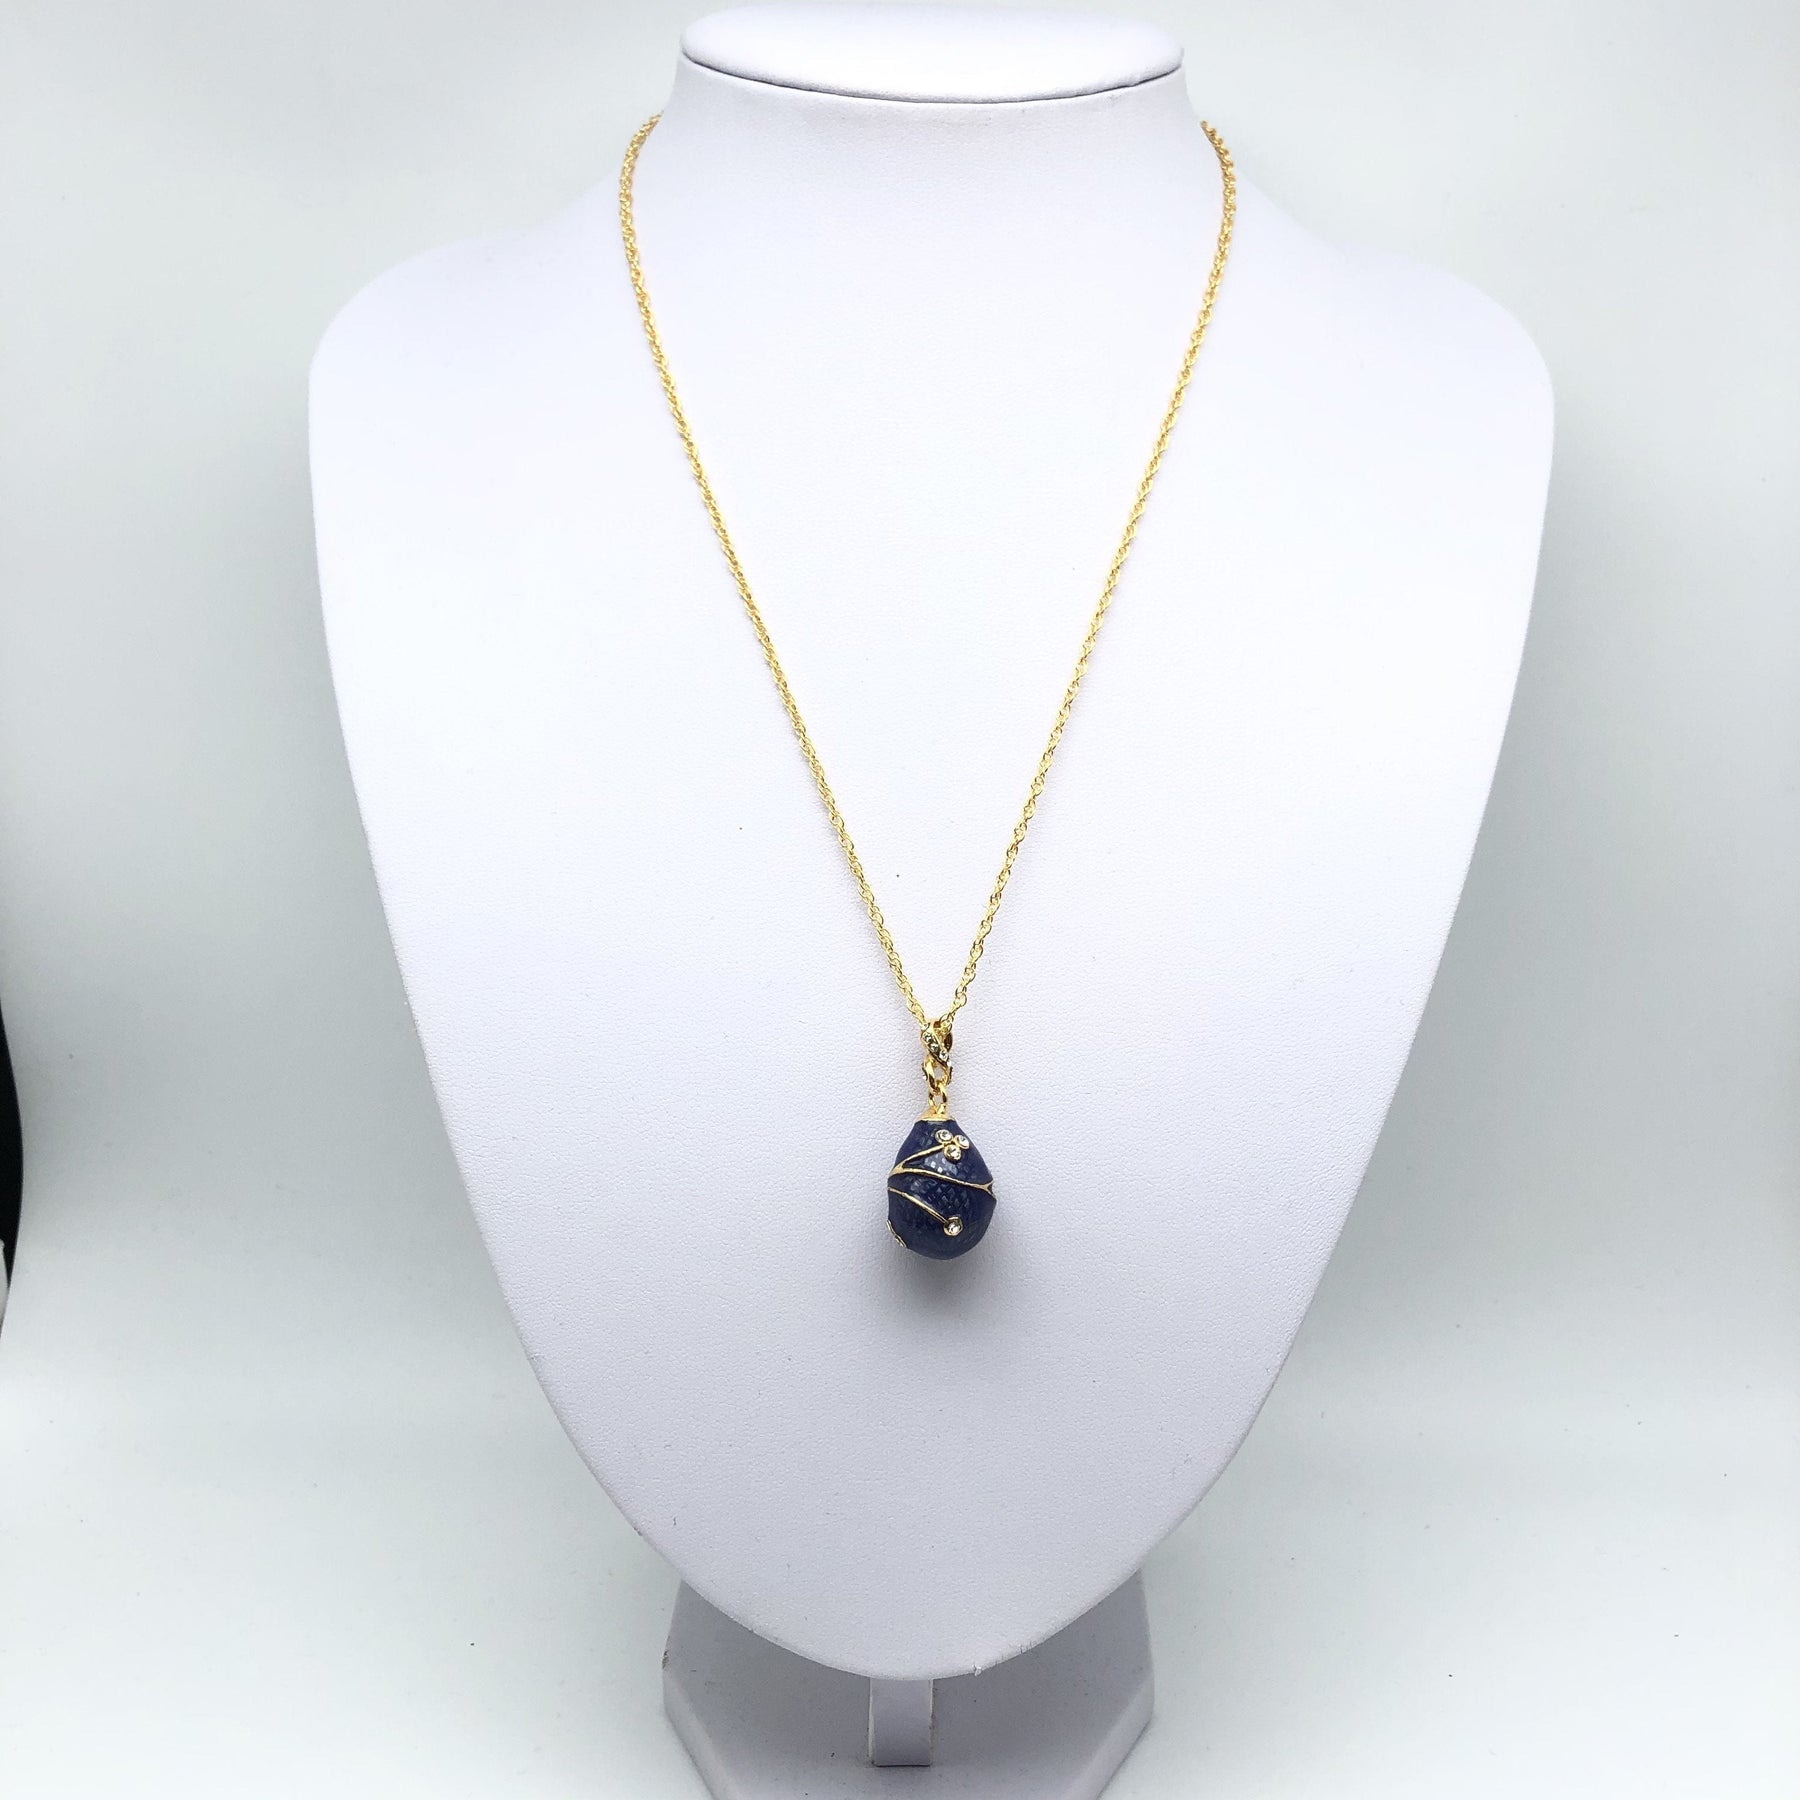 Blue Egg Pendant Gold Necklace jewelry Keren Kopal